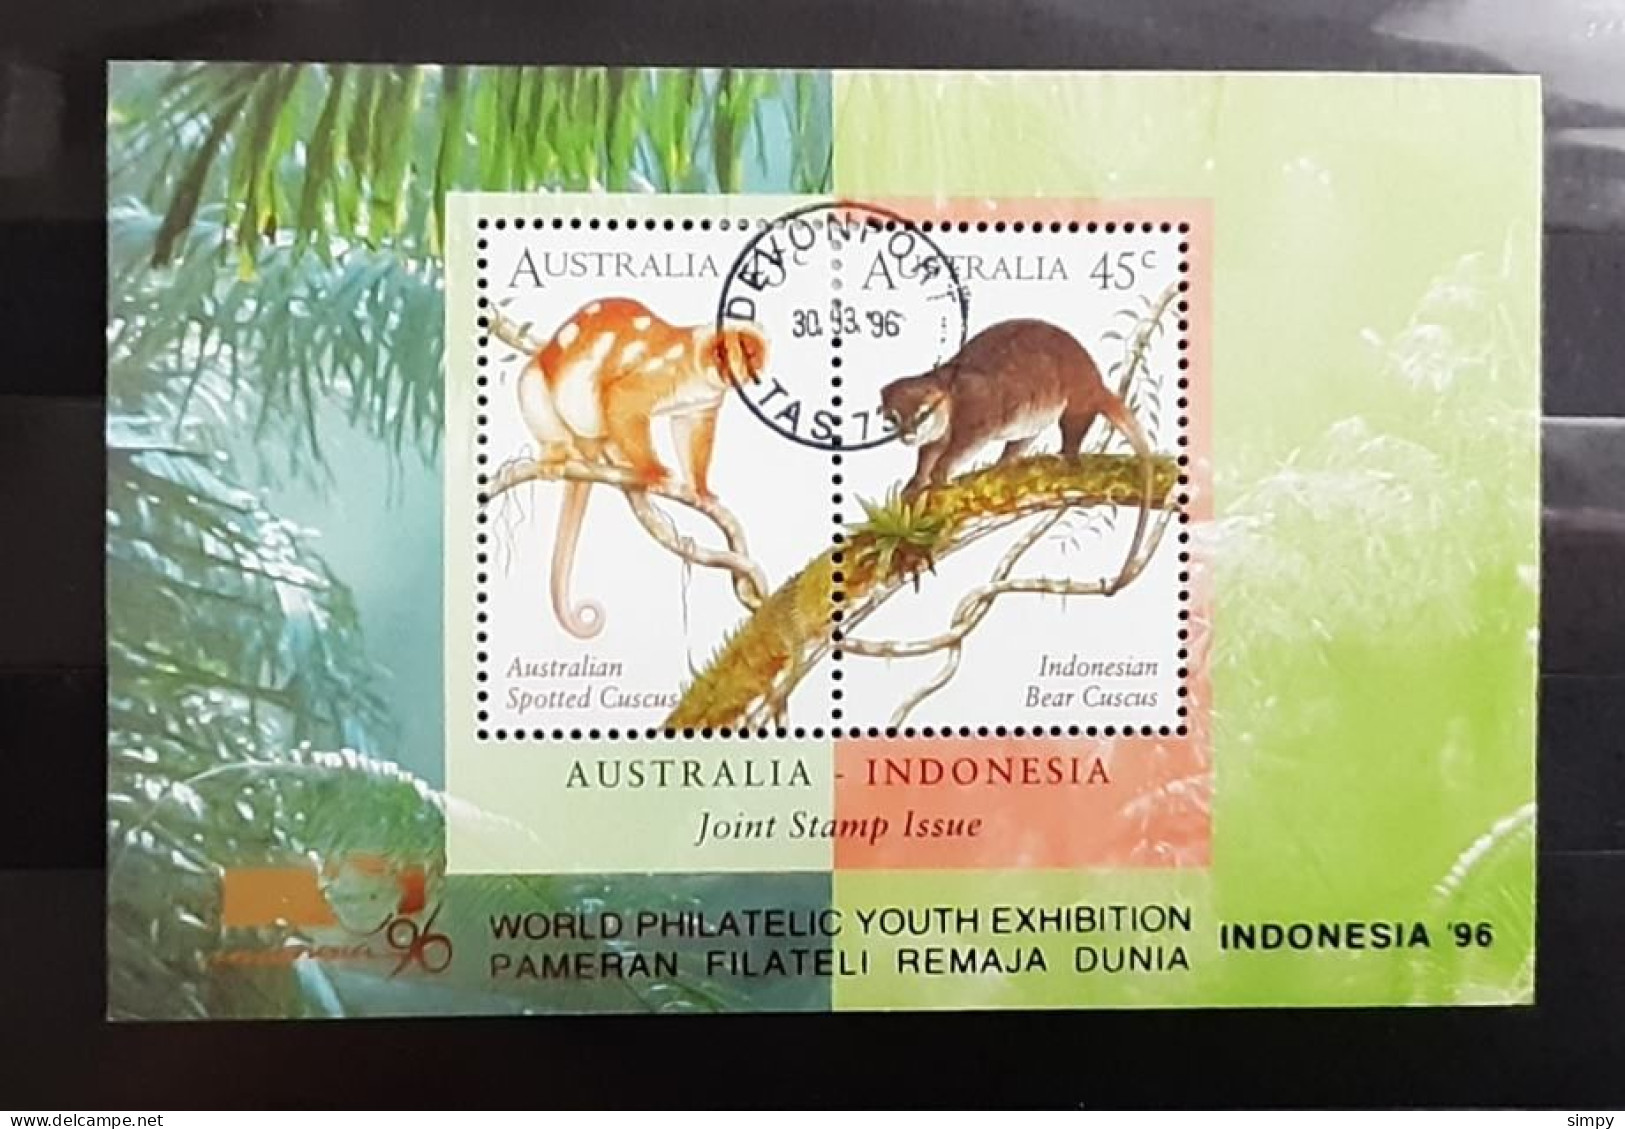 AUSTRALIA 1996 Cuscus Stamp Show Exhibition Indonesia Used Mini Sheet Block - Blocchi & Foglietti